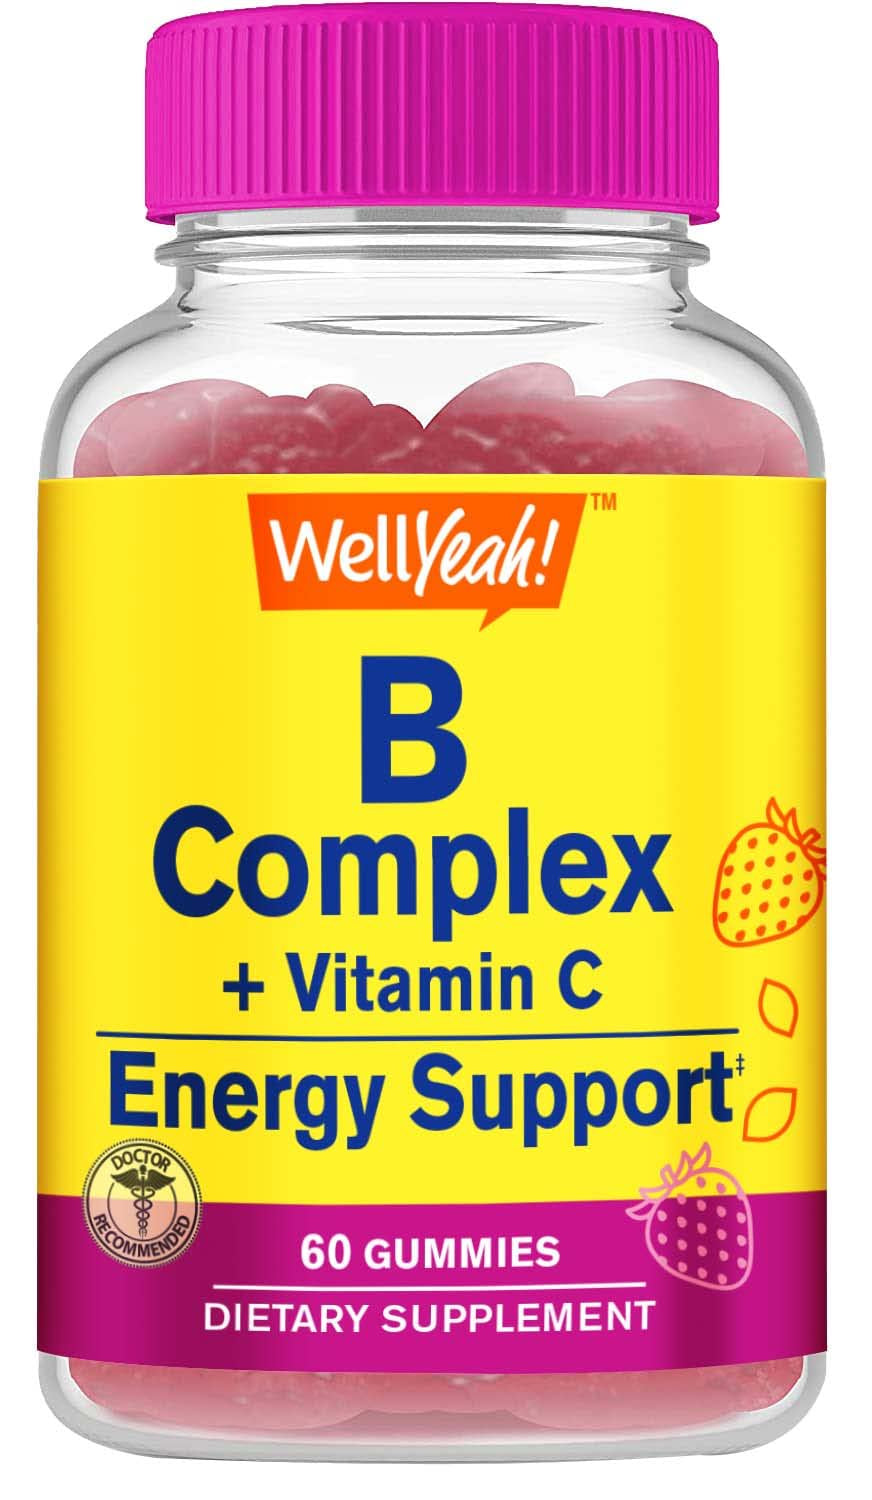 Wellyeah Vitamin B Complex Gummies -With Vitamin C, Niacin, Vitamin B6, Folic Acid, Vitamin B12, Biotin & Pantothenic Acid - 2 Month Supply -Natural Strawberry Flavor, Non GMO, Gluten Free -60 Gummies